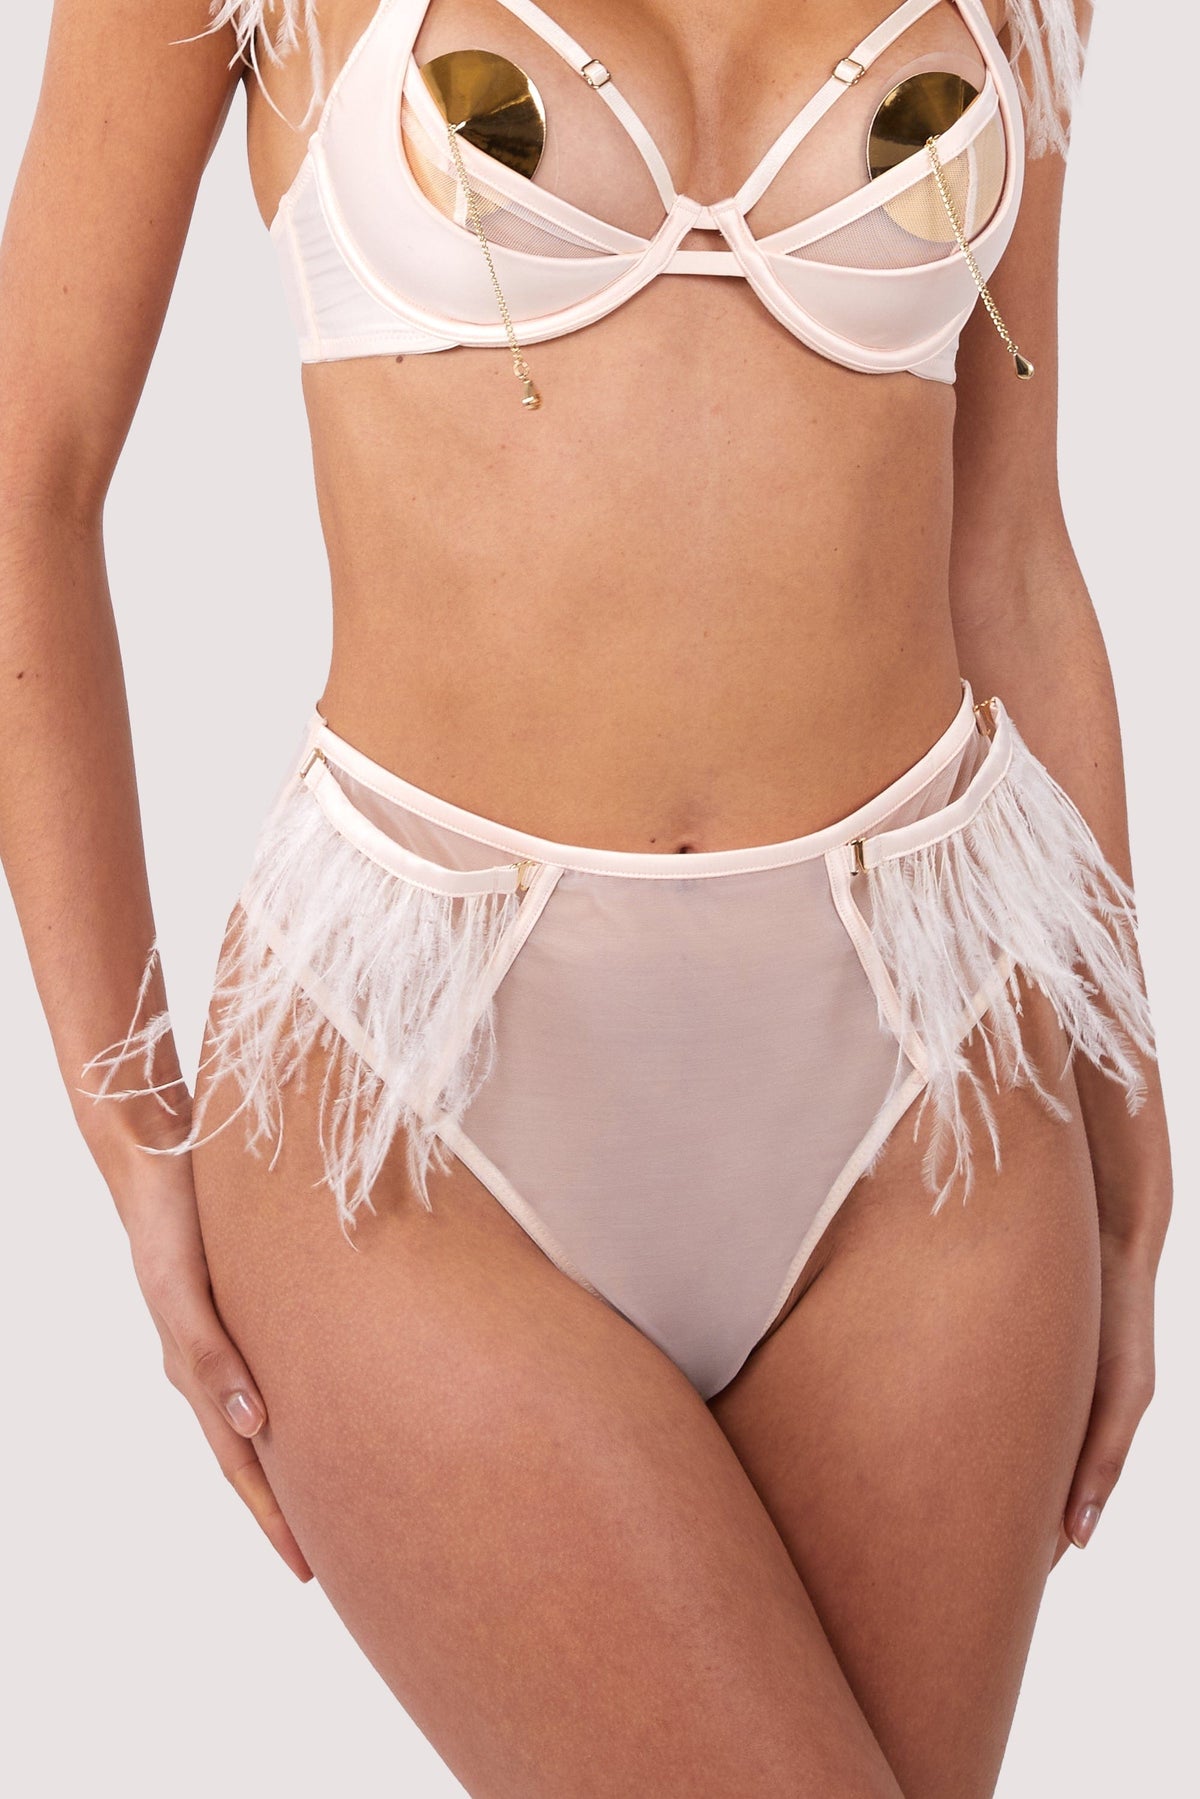 Feather Bra – Ephifany Underwear